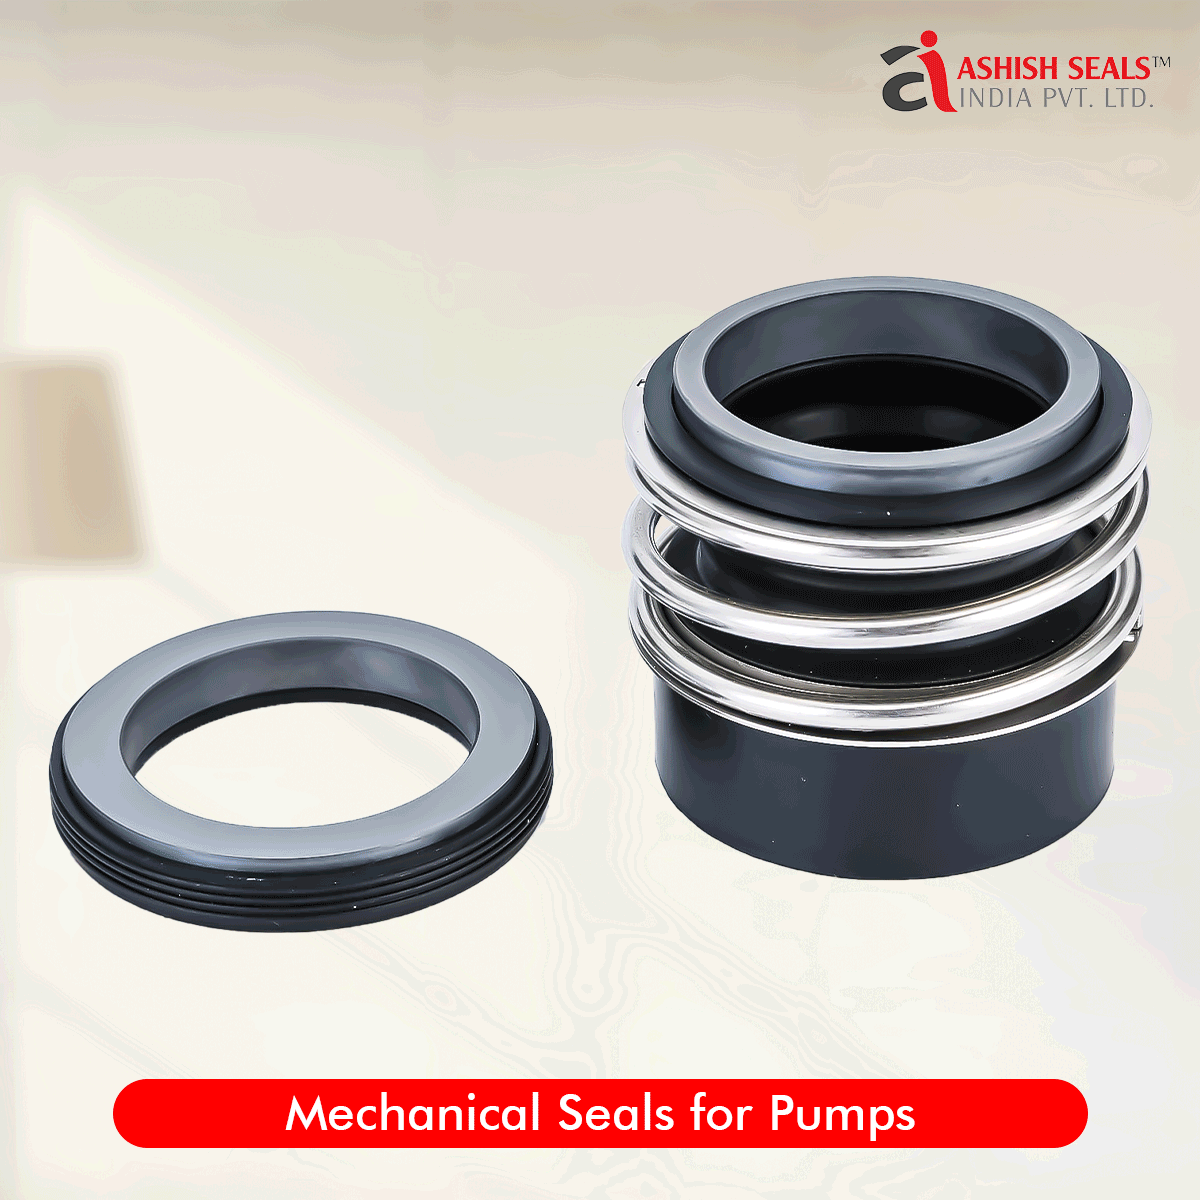 Mechanical Seals for Pumps